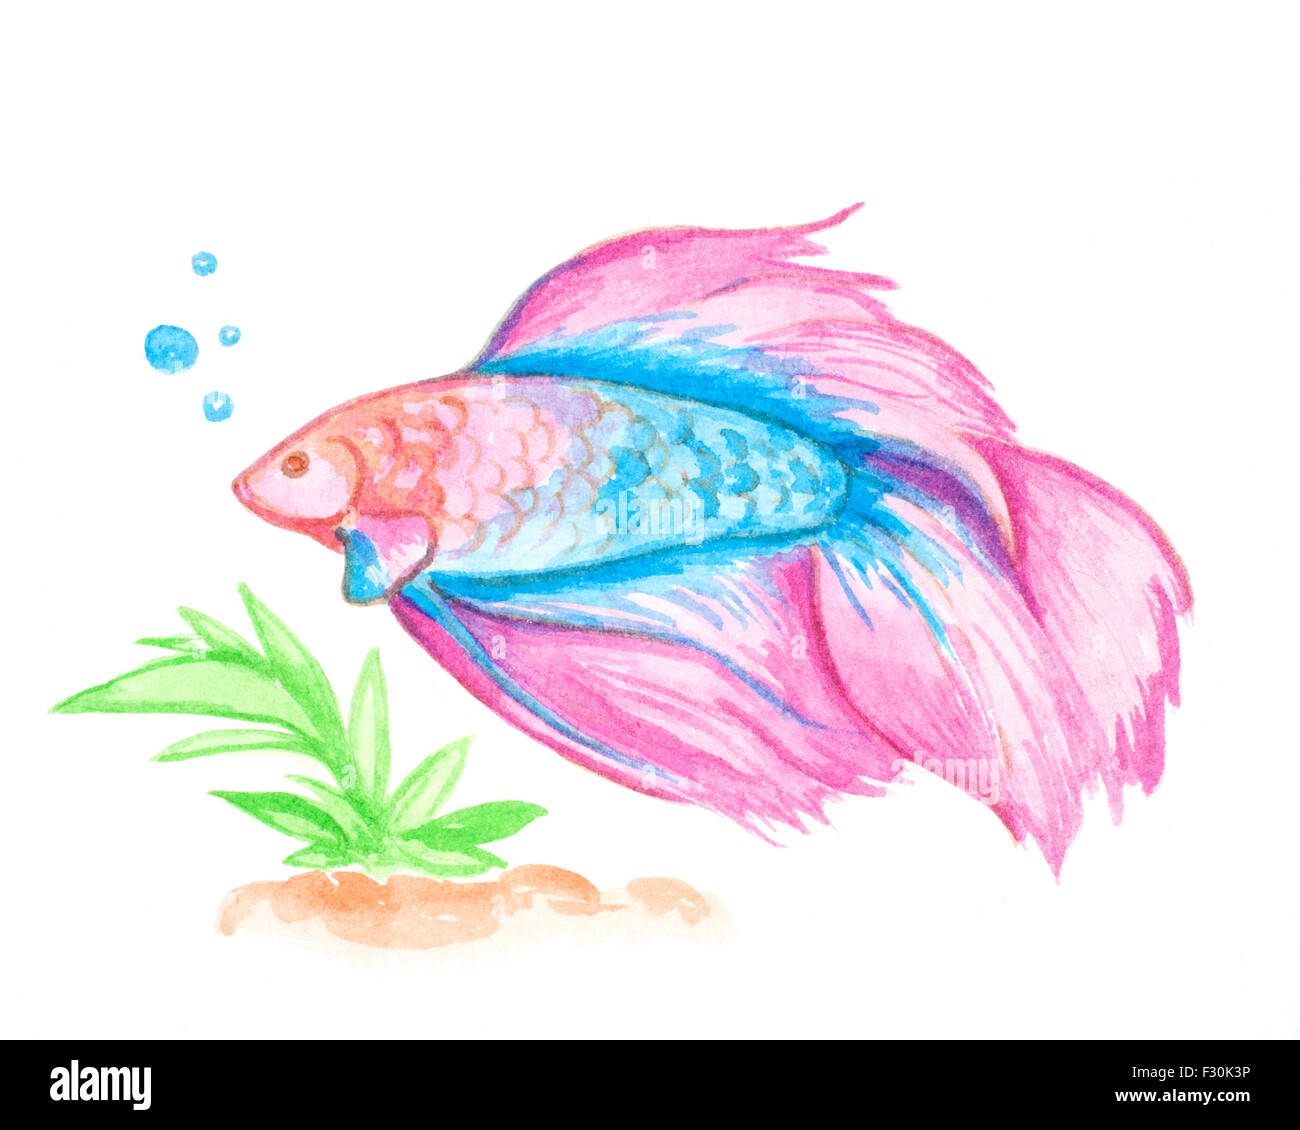 Hand drawn decorative watercolor pink aquarium fish Stock Photo